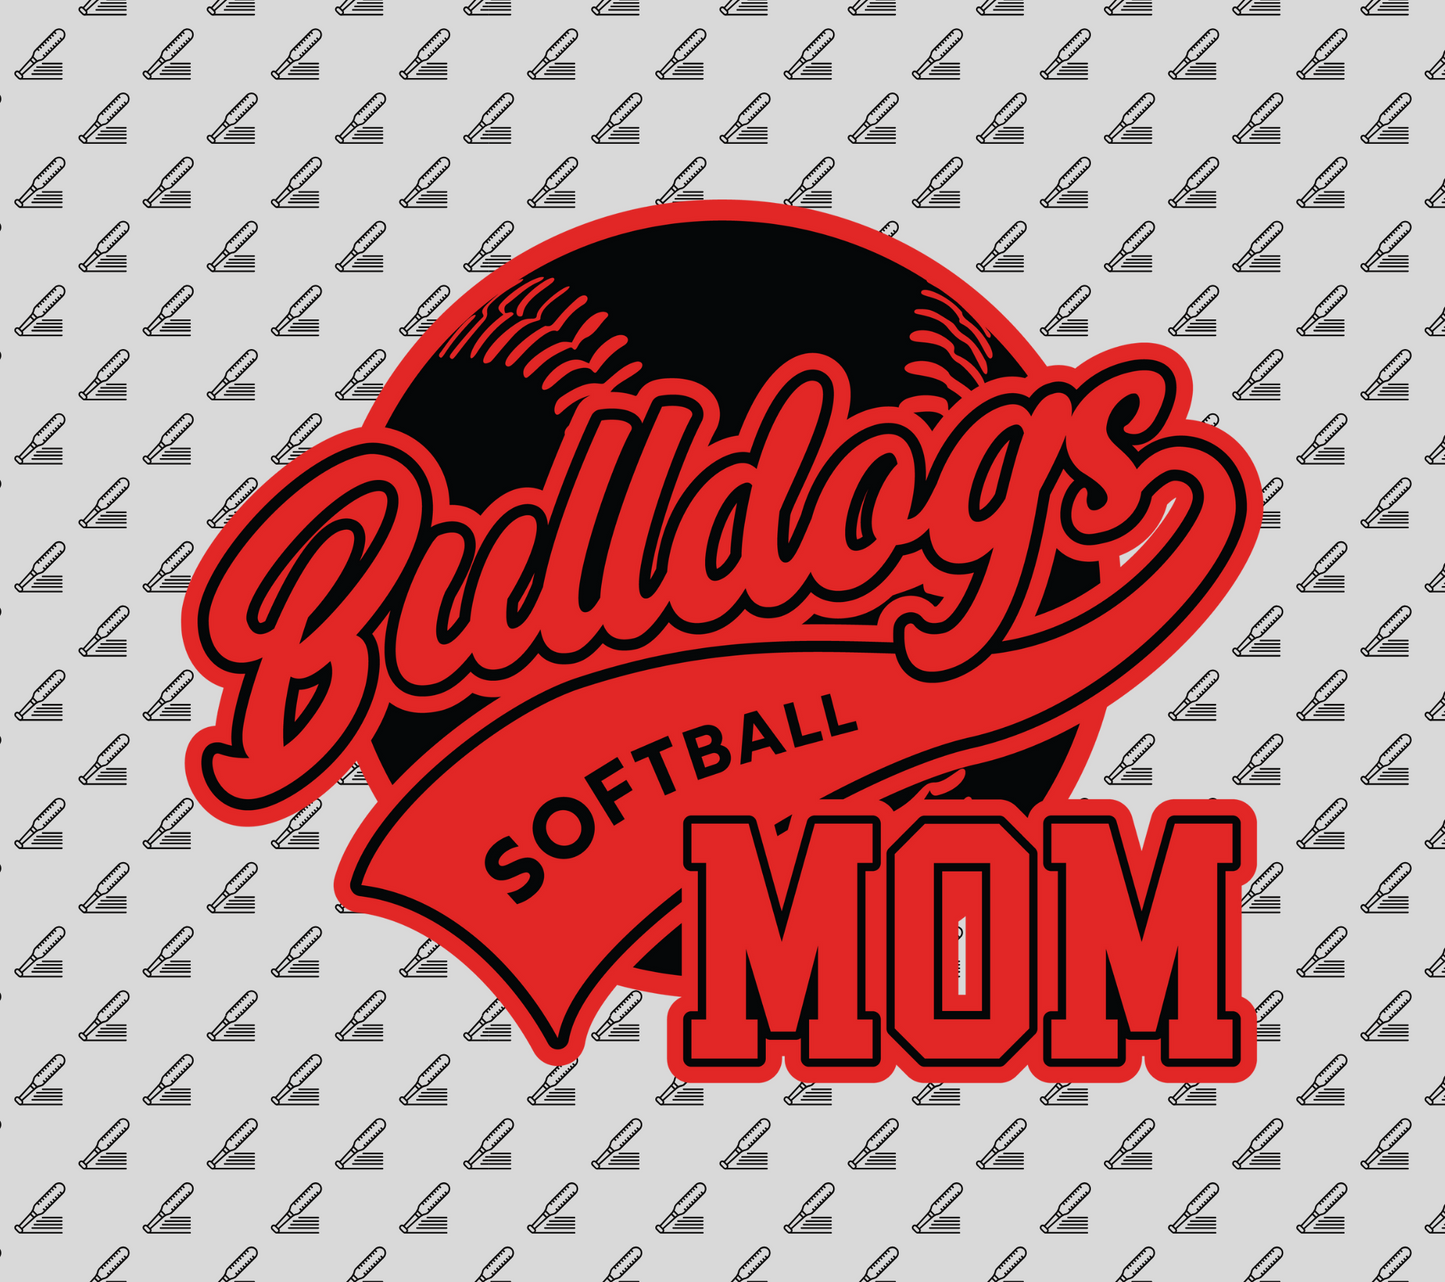 Bulldog Softball mom